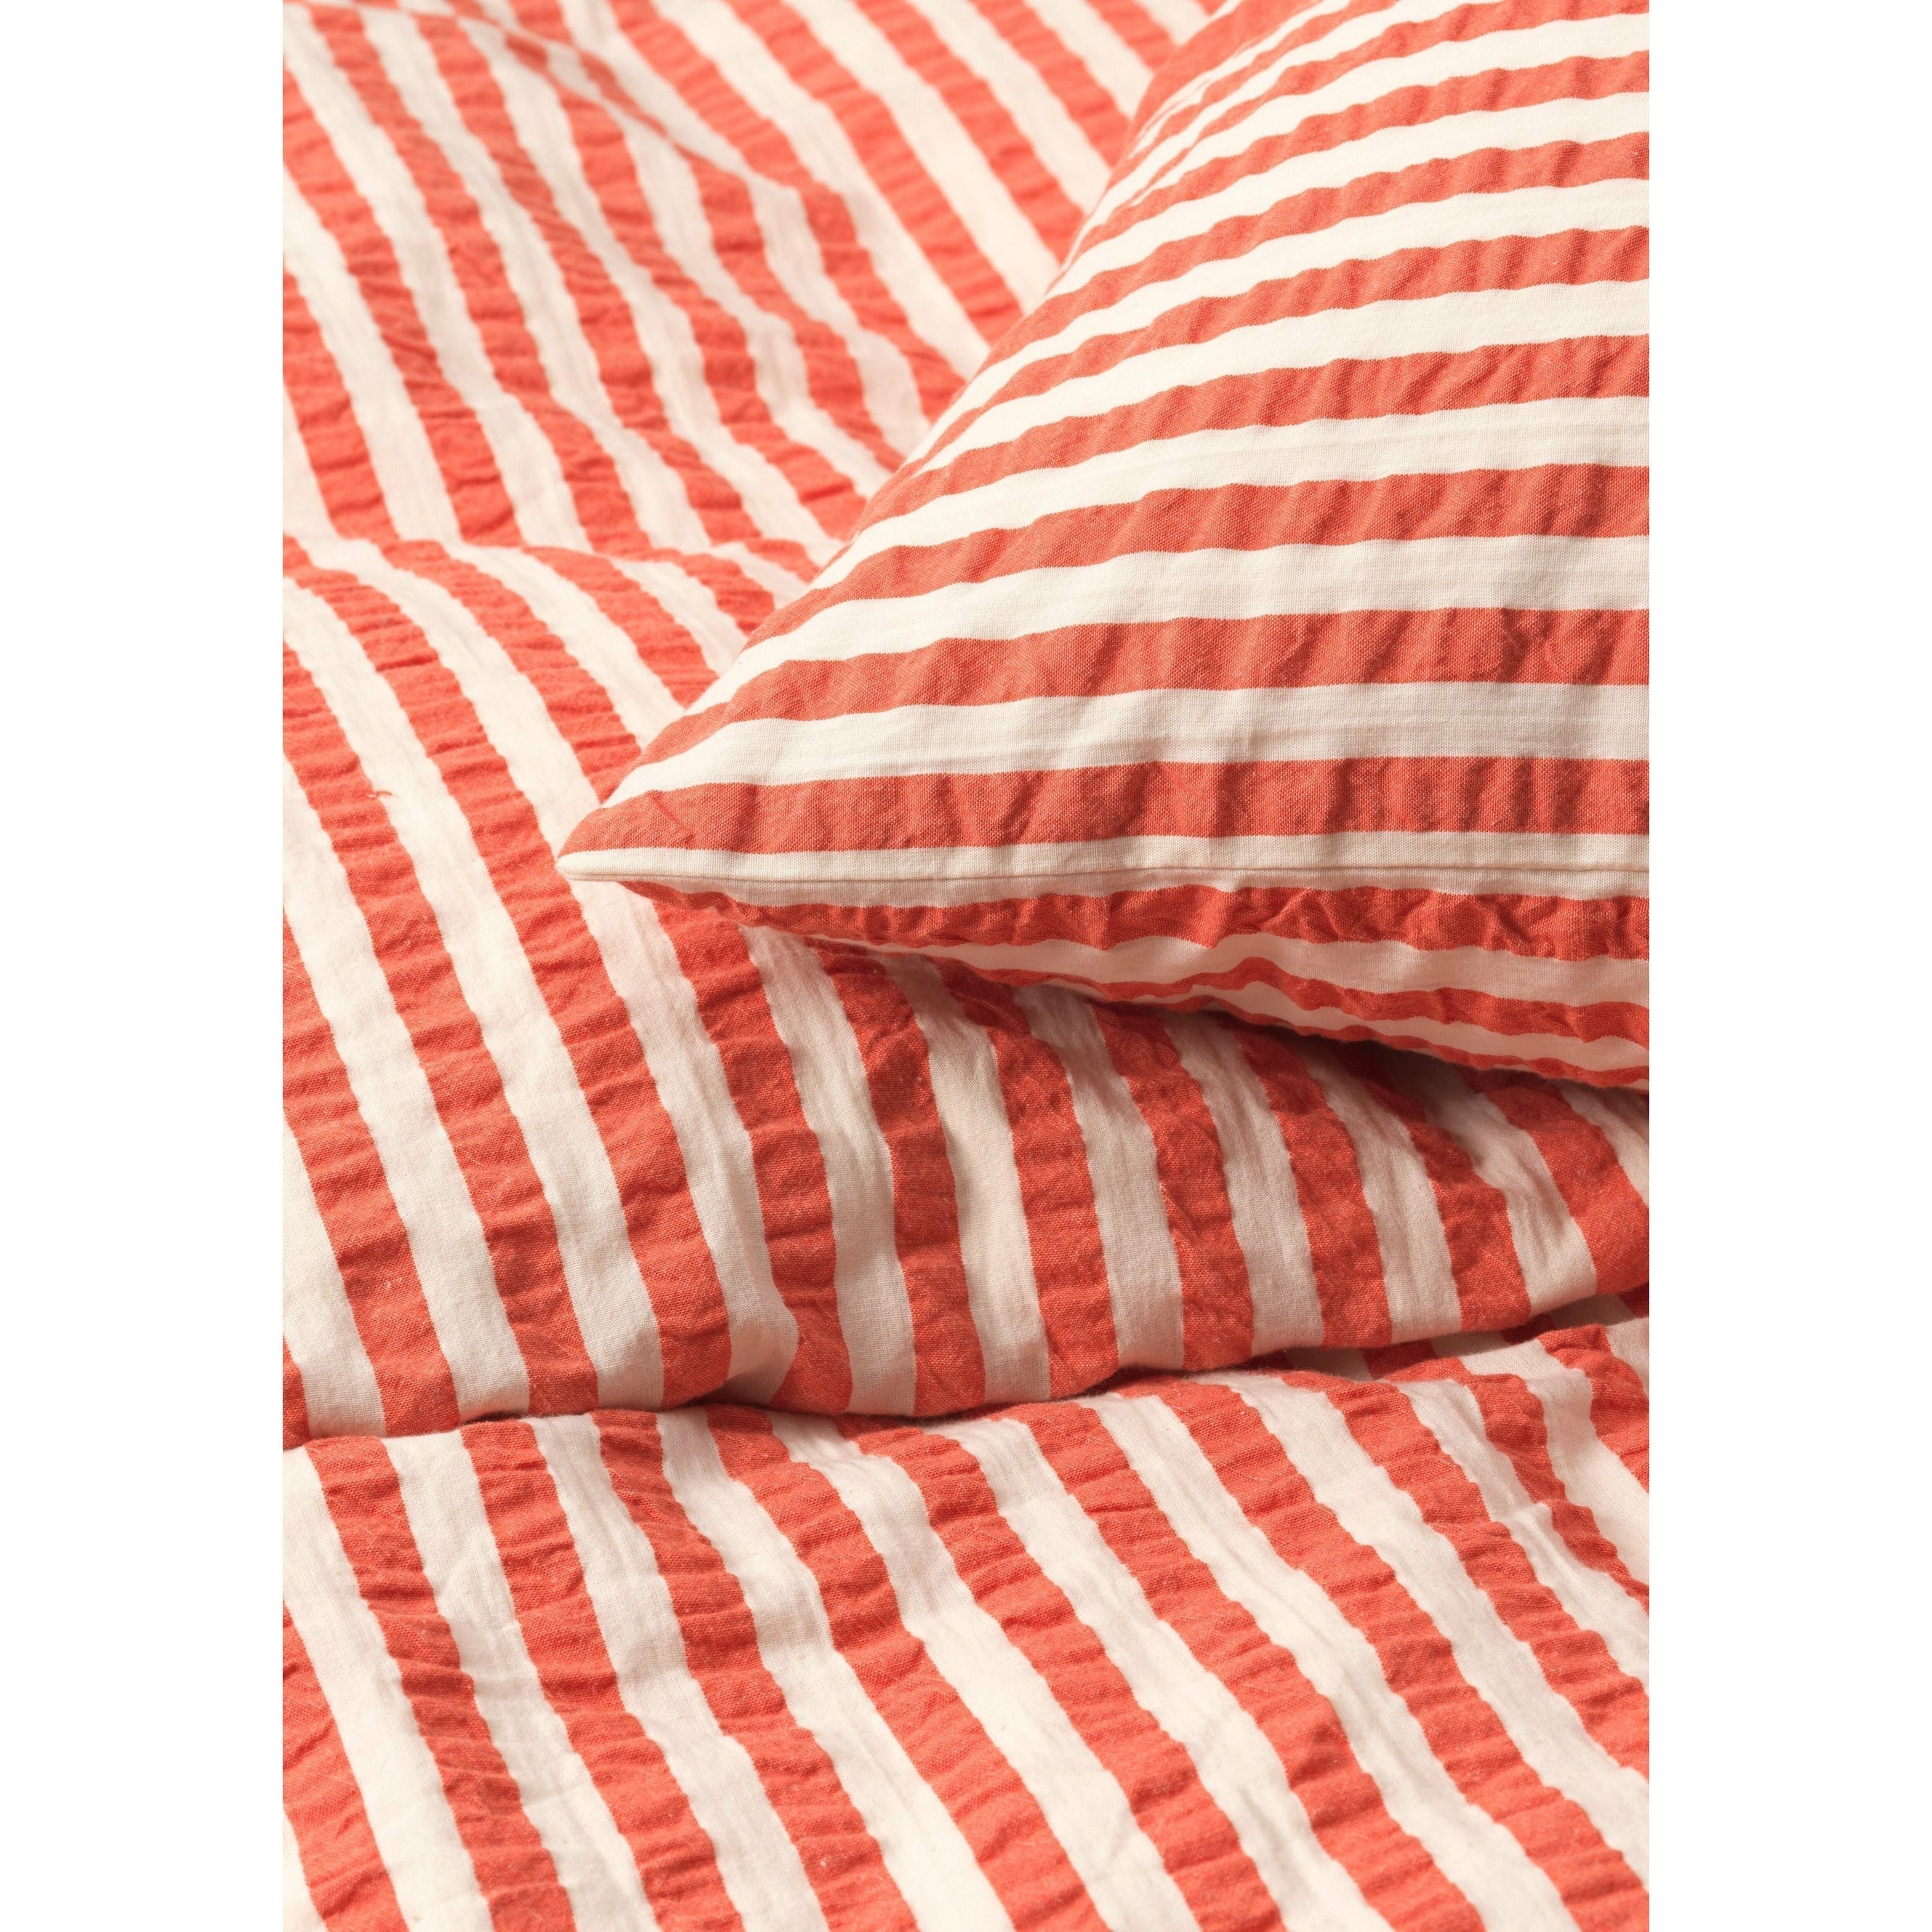 Juna Bæk & bølge linjer sängkläder 200x220 cm, chili/björk